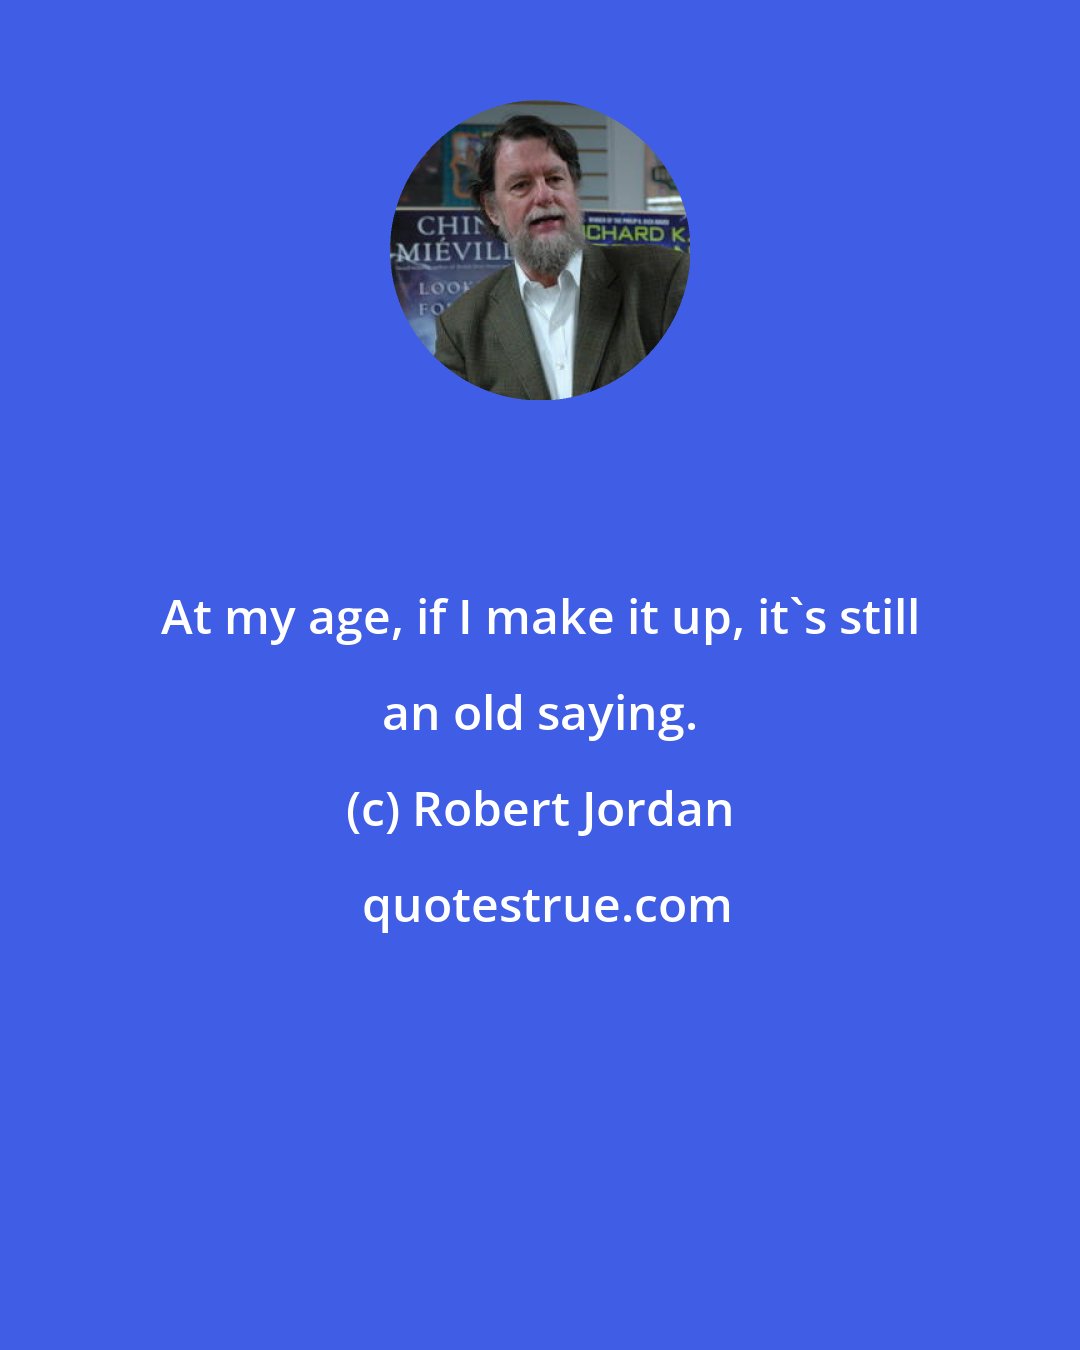 Robert Jordan: At my age, if I make it up, it's still an old saying.